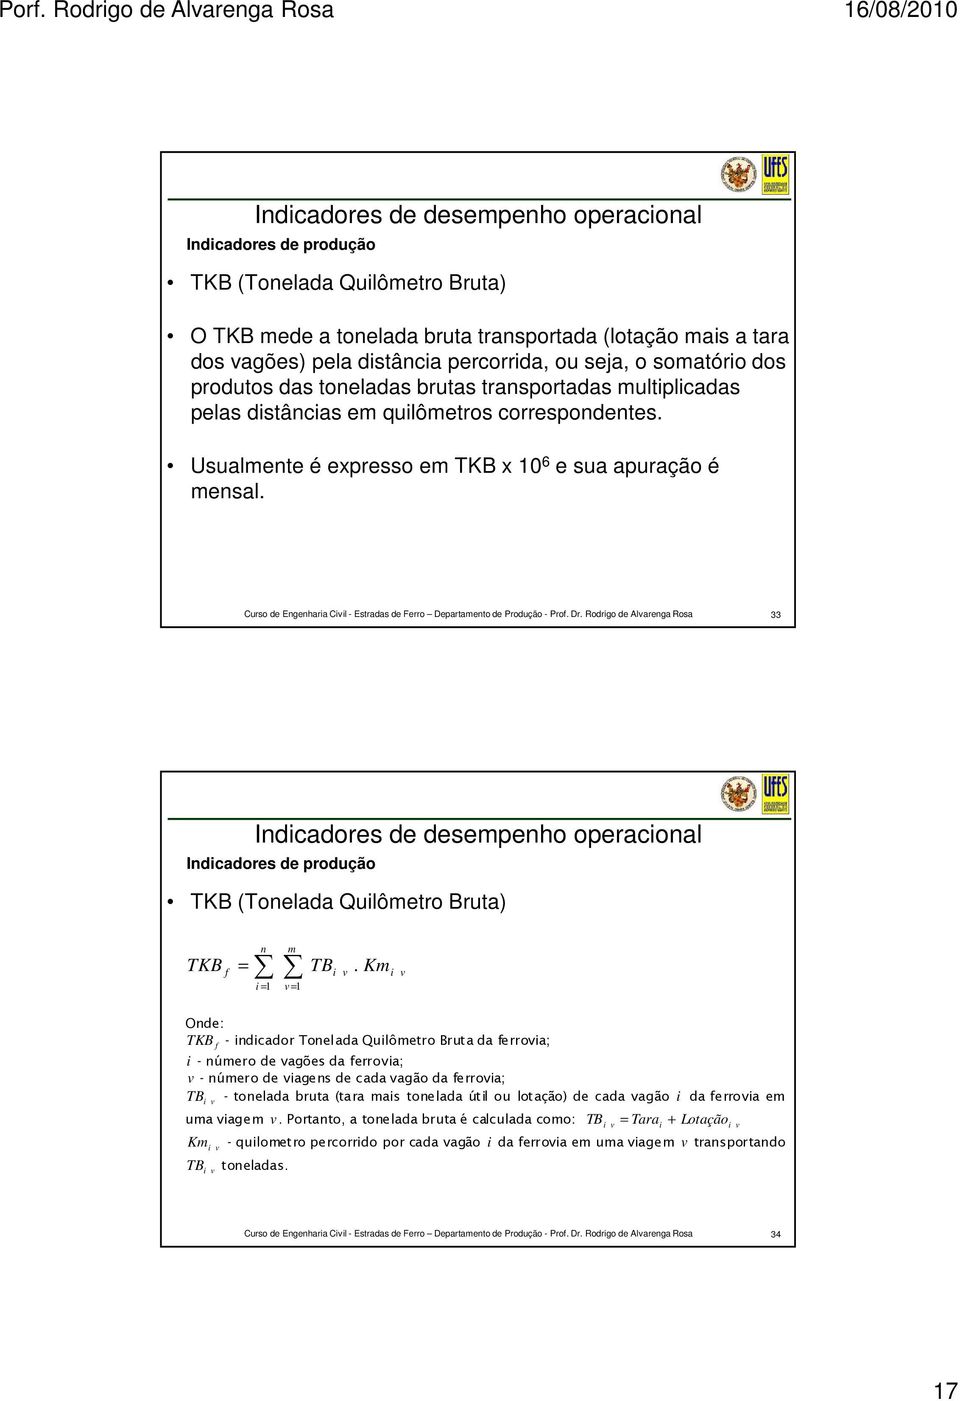 33 Indicadores de desempenho operacional Indicadores de produção TKB (Tonelada Quilômetro Bruta) f n m TKB = TB.